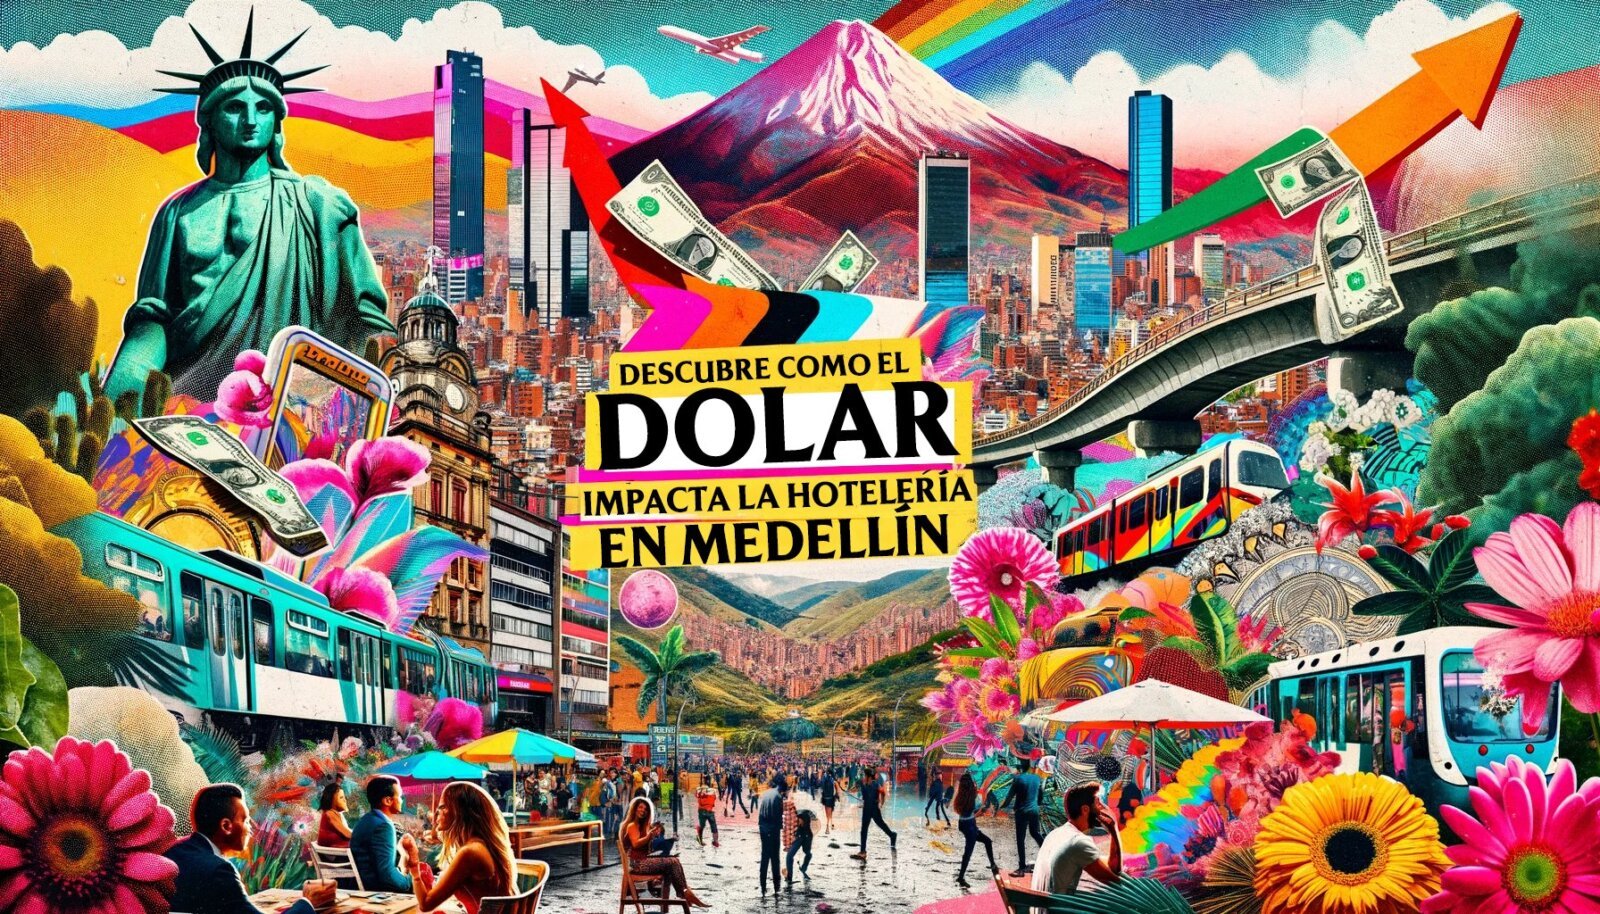 MACCA | DALL·E 2023 12 27 11.27.02 A collage for a blog cover emphasizing the title Descubre Como el Dolar Esta Convirtiendo a Medellin en el Paraiso Turistico del Momento. The collag